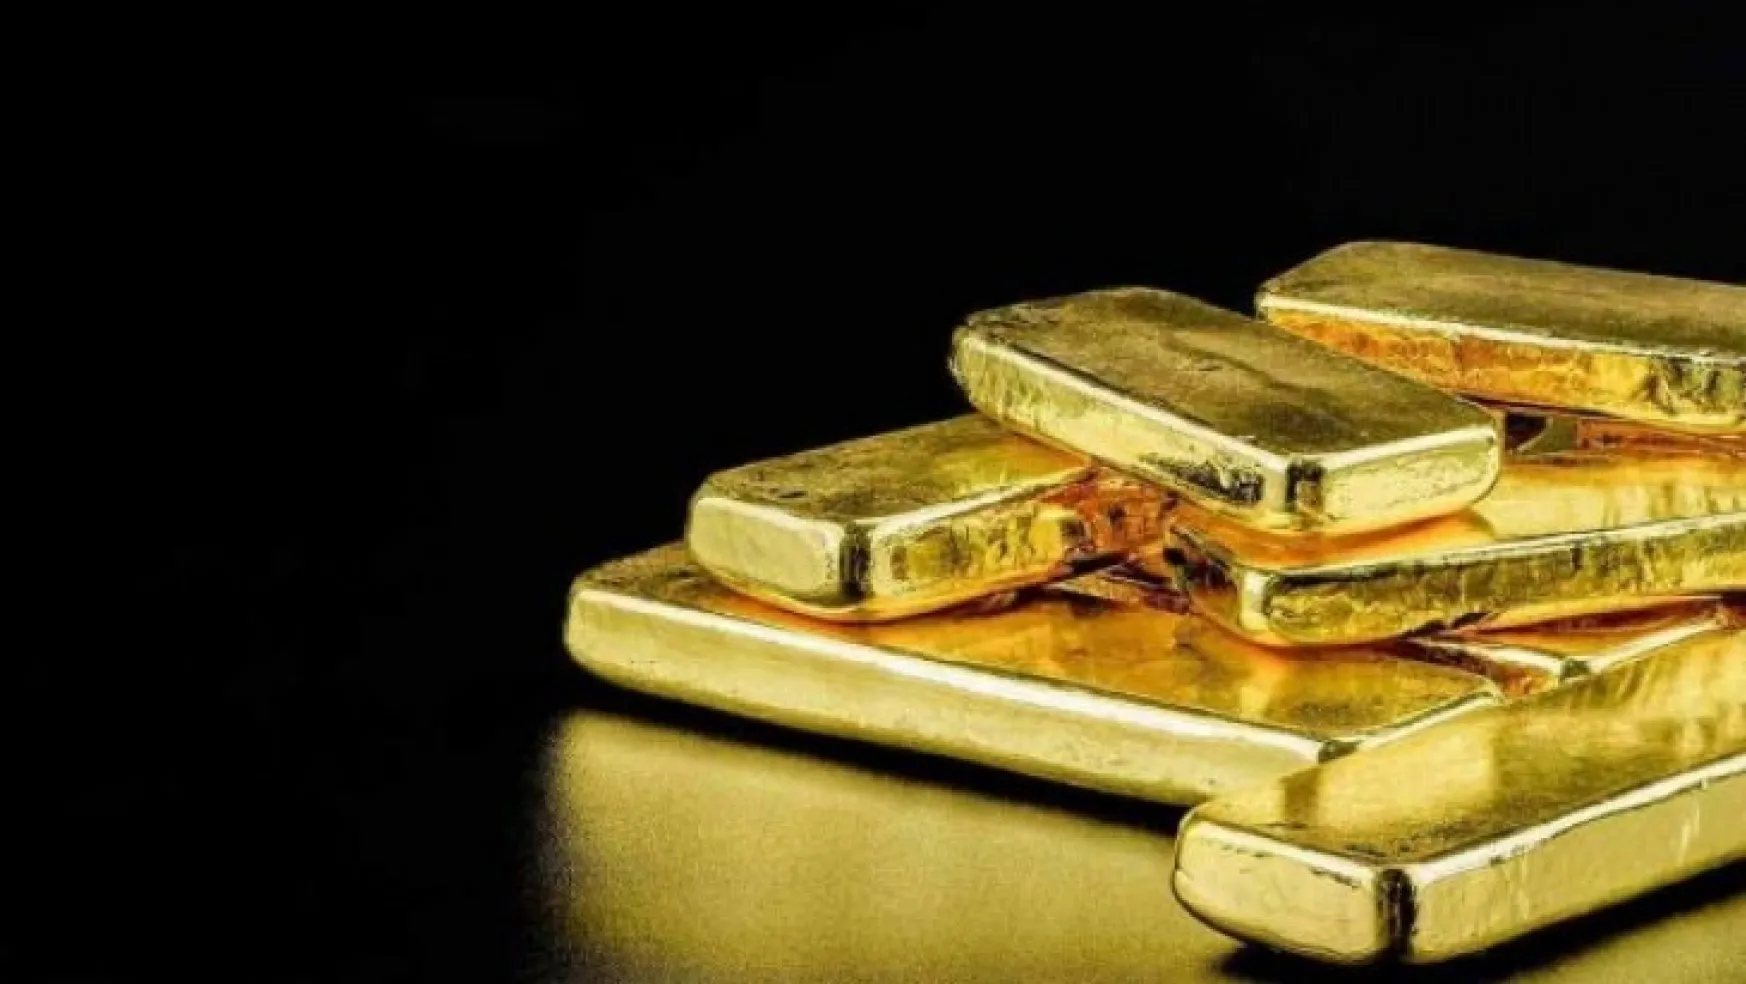 Altının kilogramı 509 bin 900 liraya yükseldi